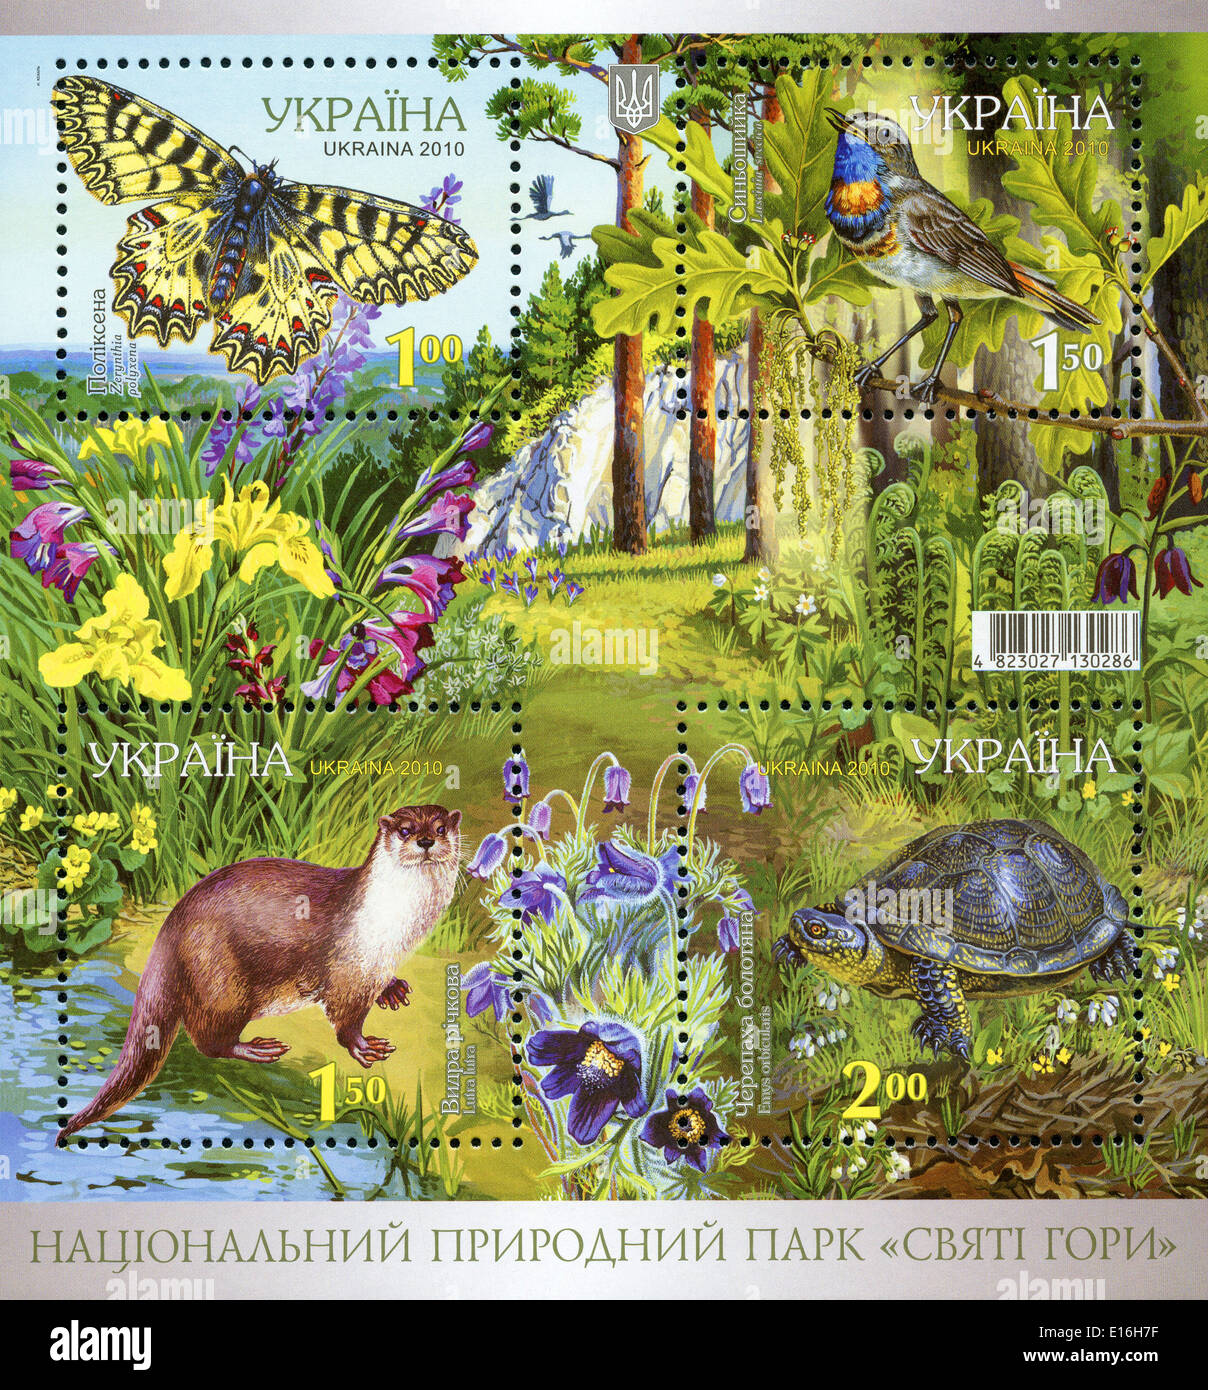 Timbres-poste illustrant ukrainien national park Sviati Gory en Ukraine Banque D'Images